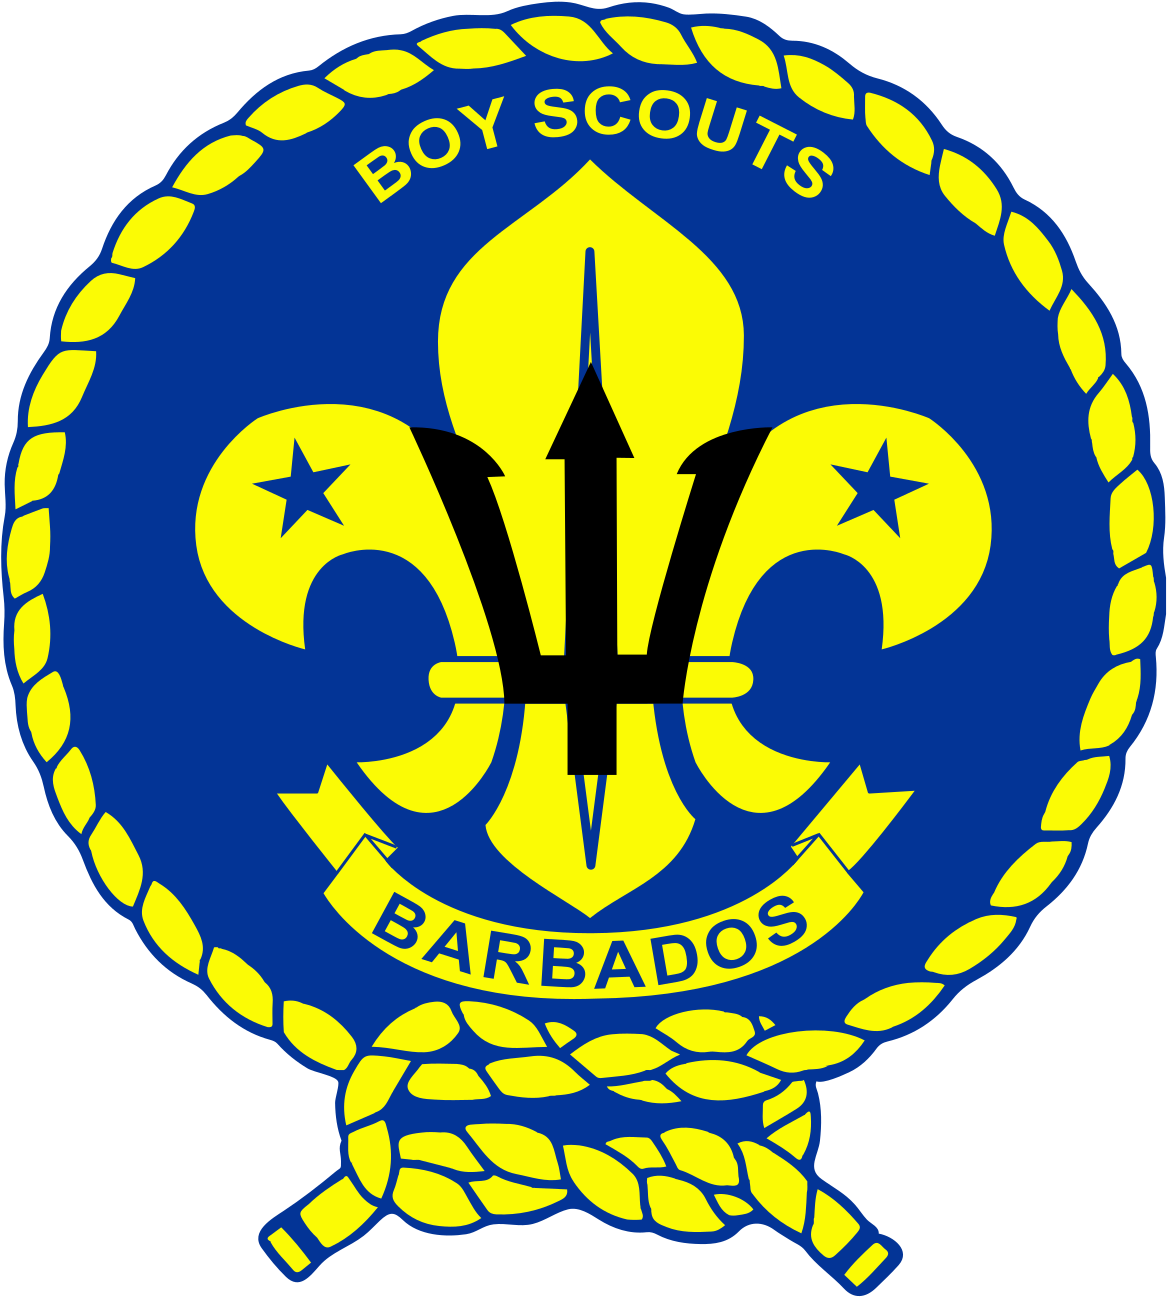 Barbados Boy Scouts Emblem PNG image